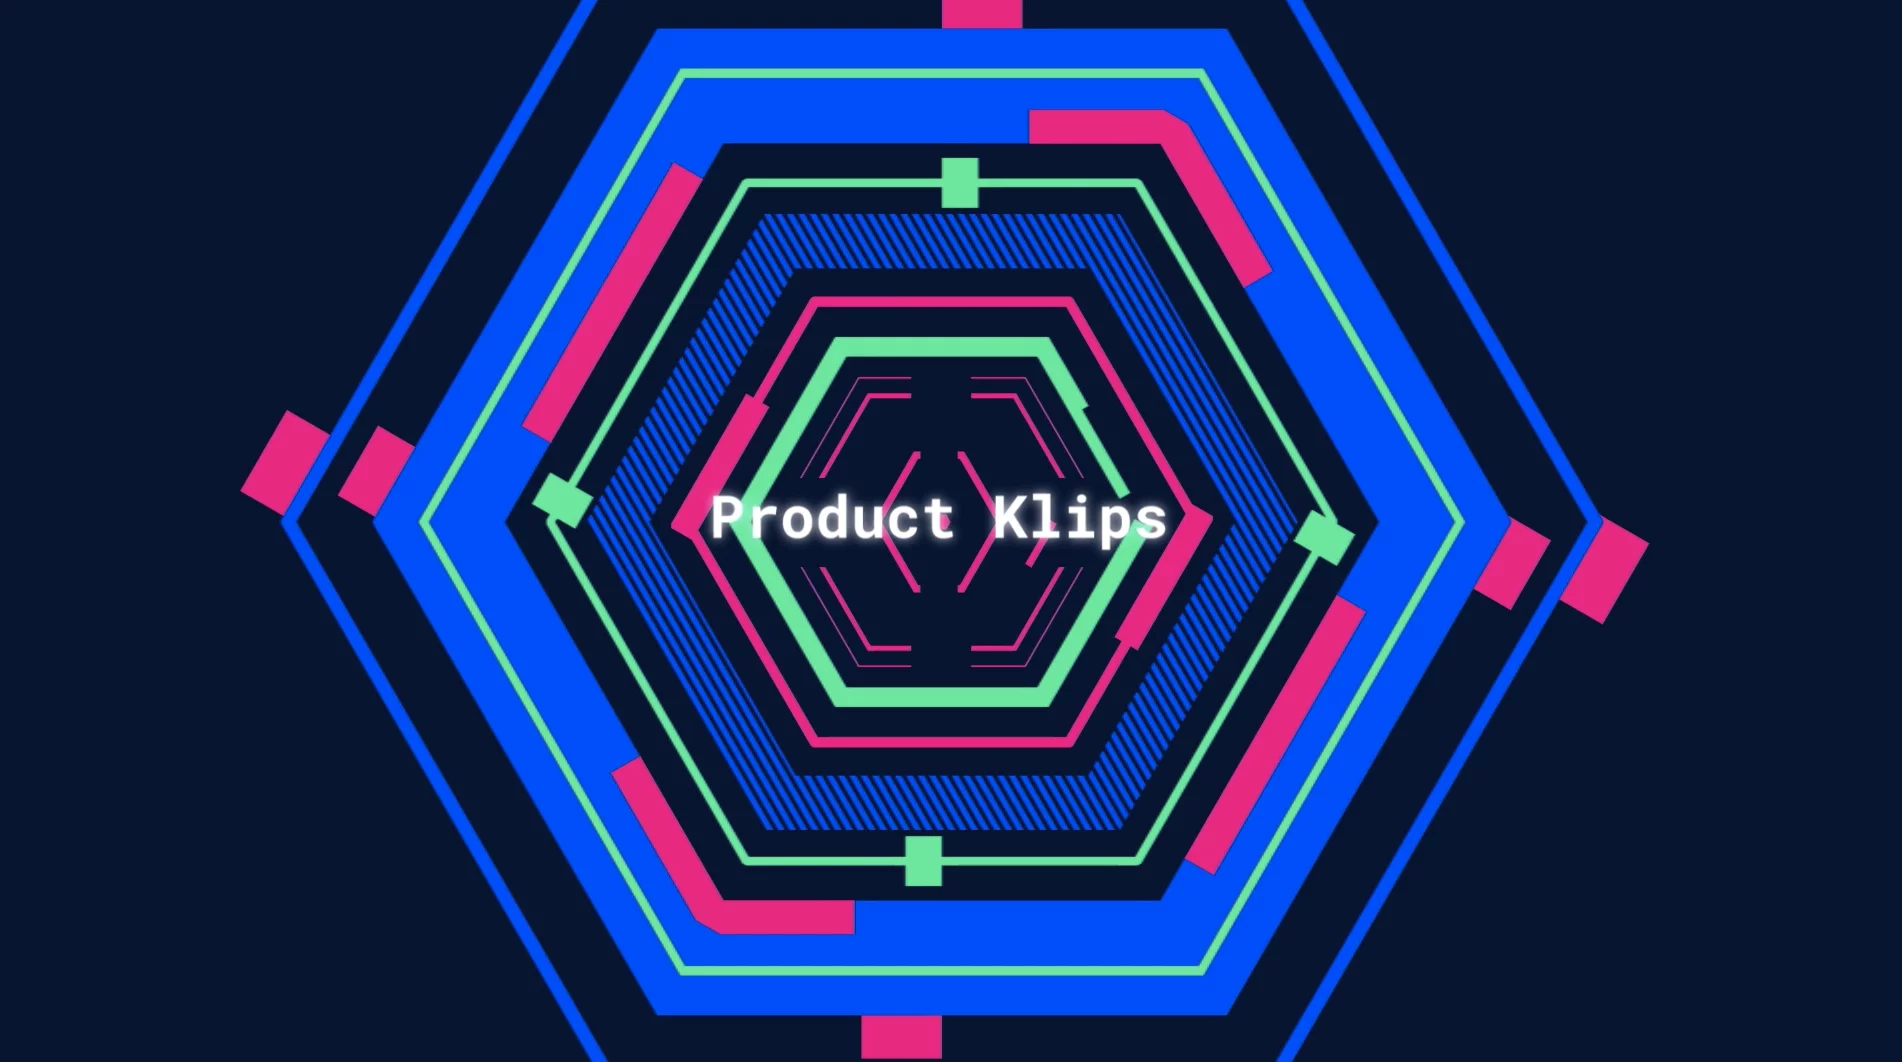 komodor-product-klips